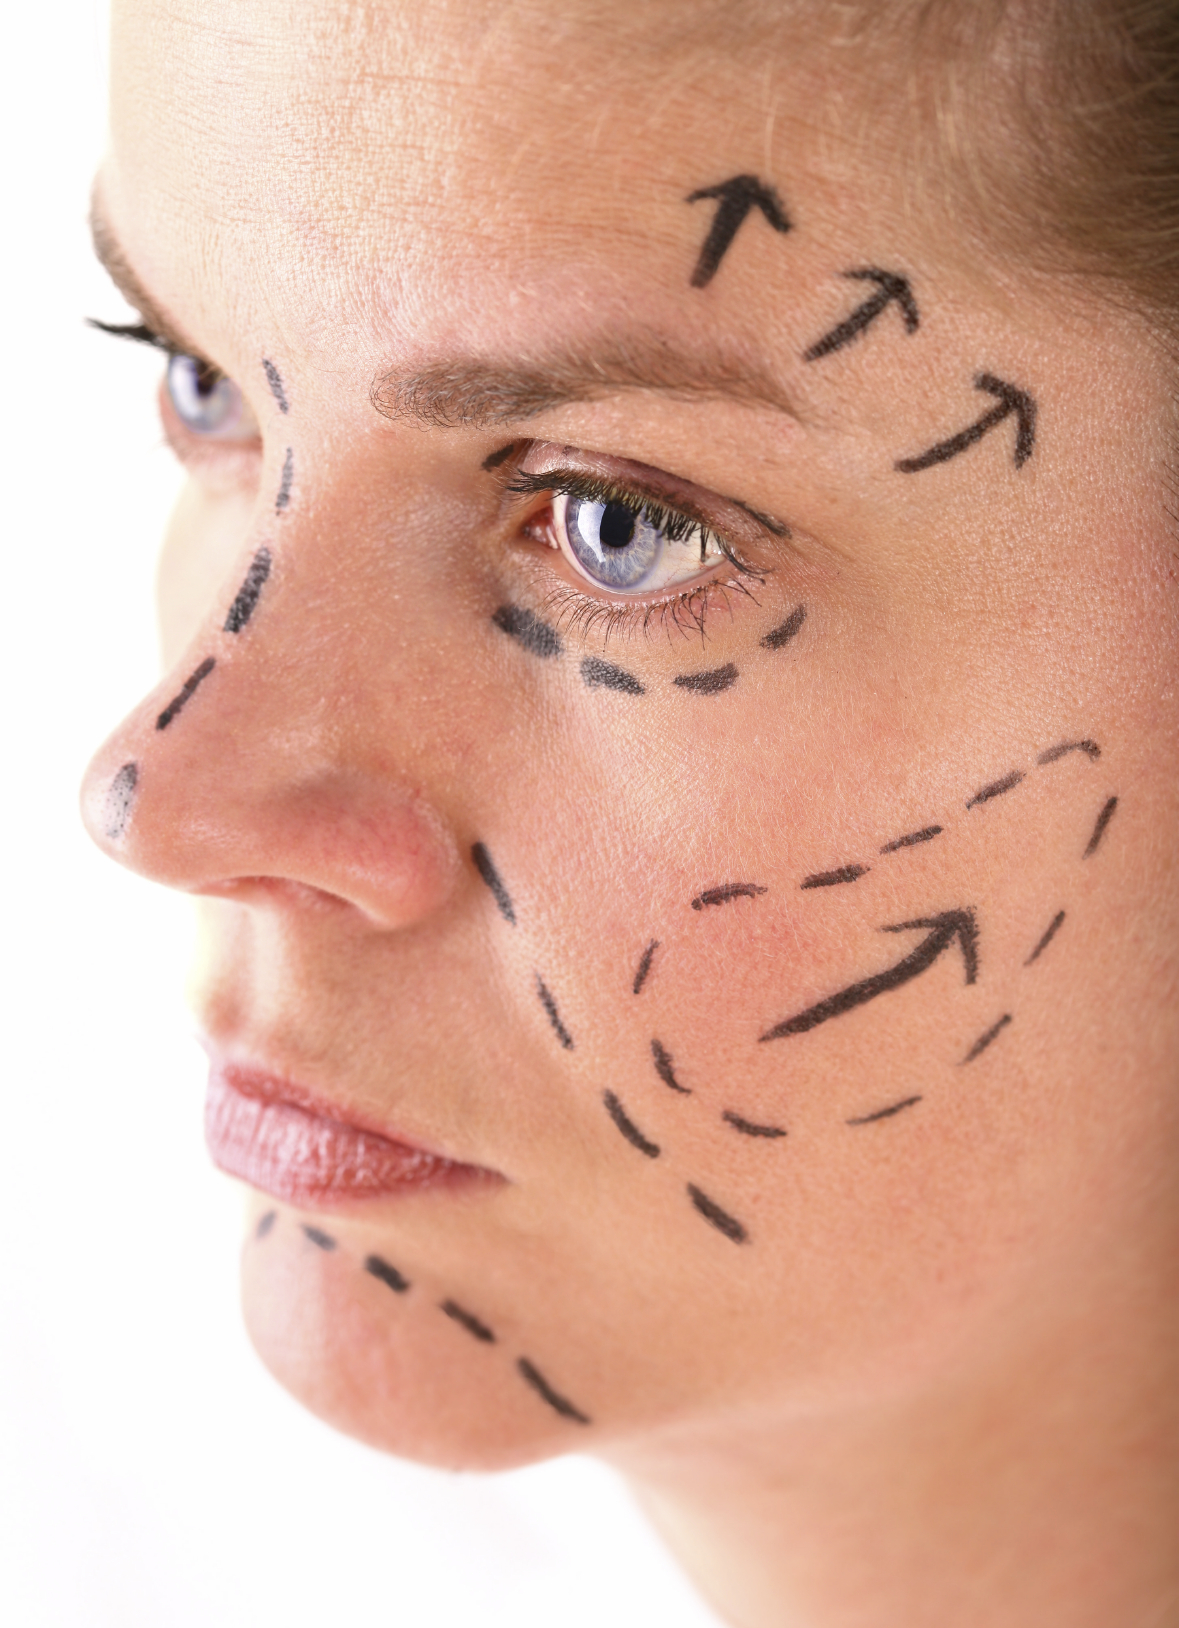 Facial Plastic Surgery Pictures 96